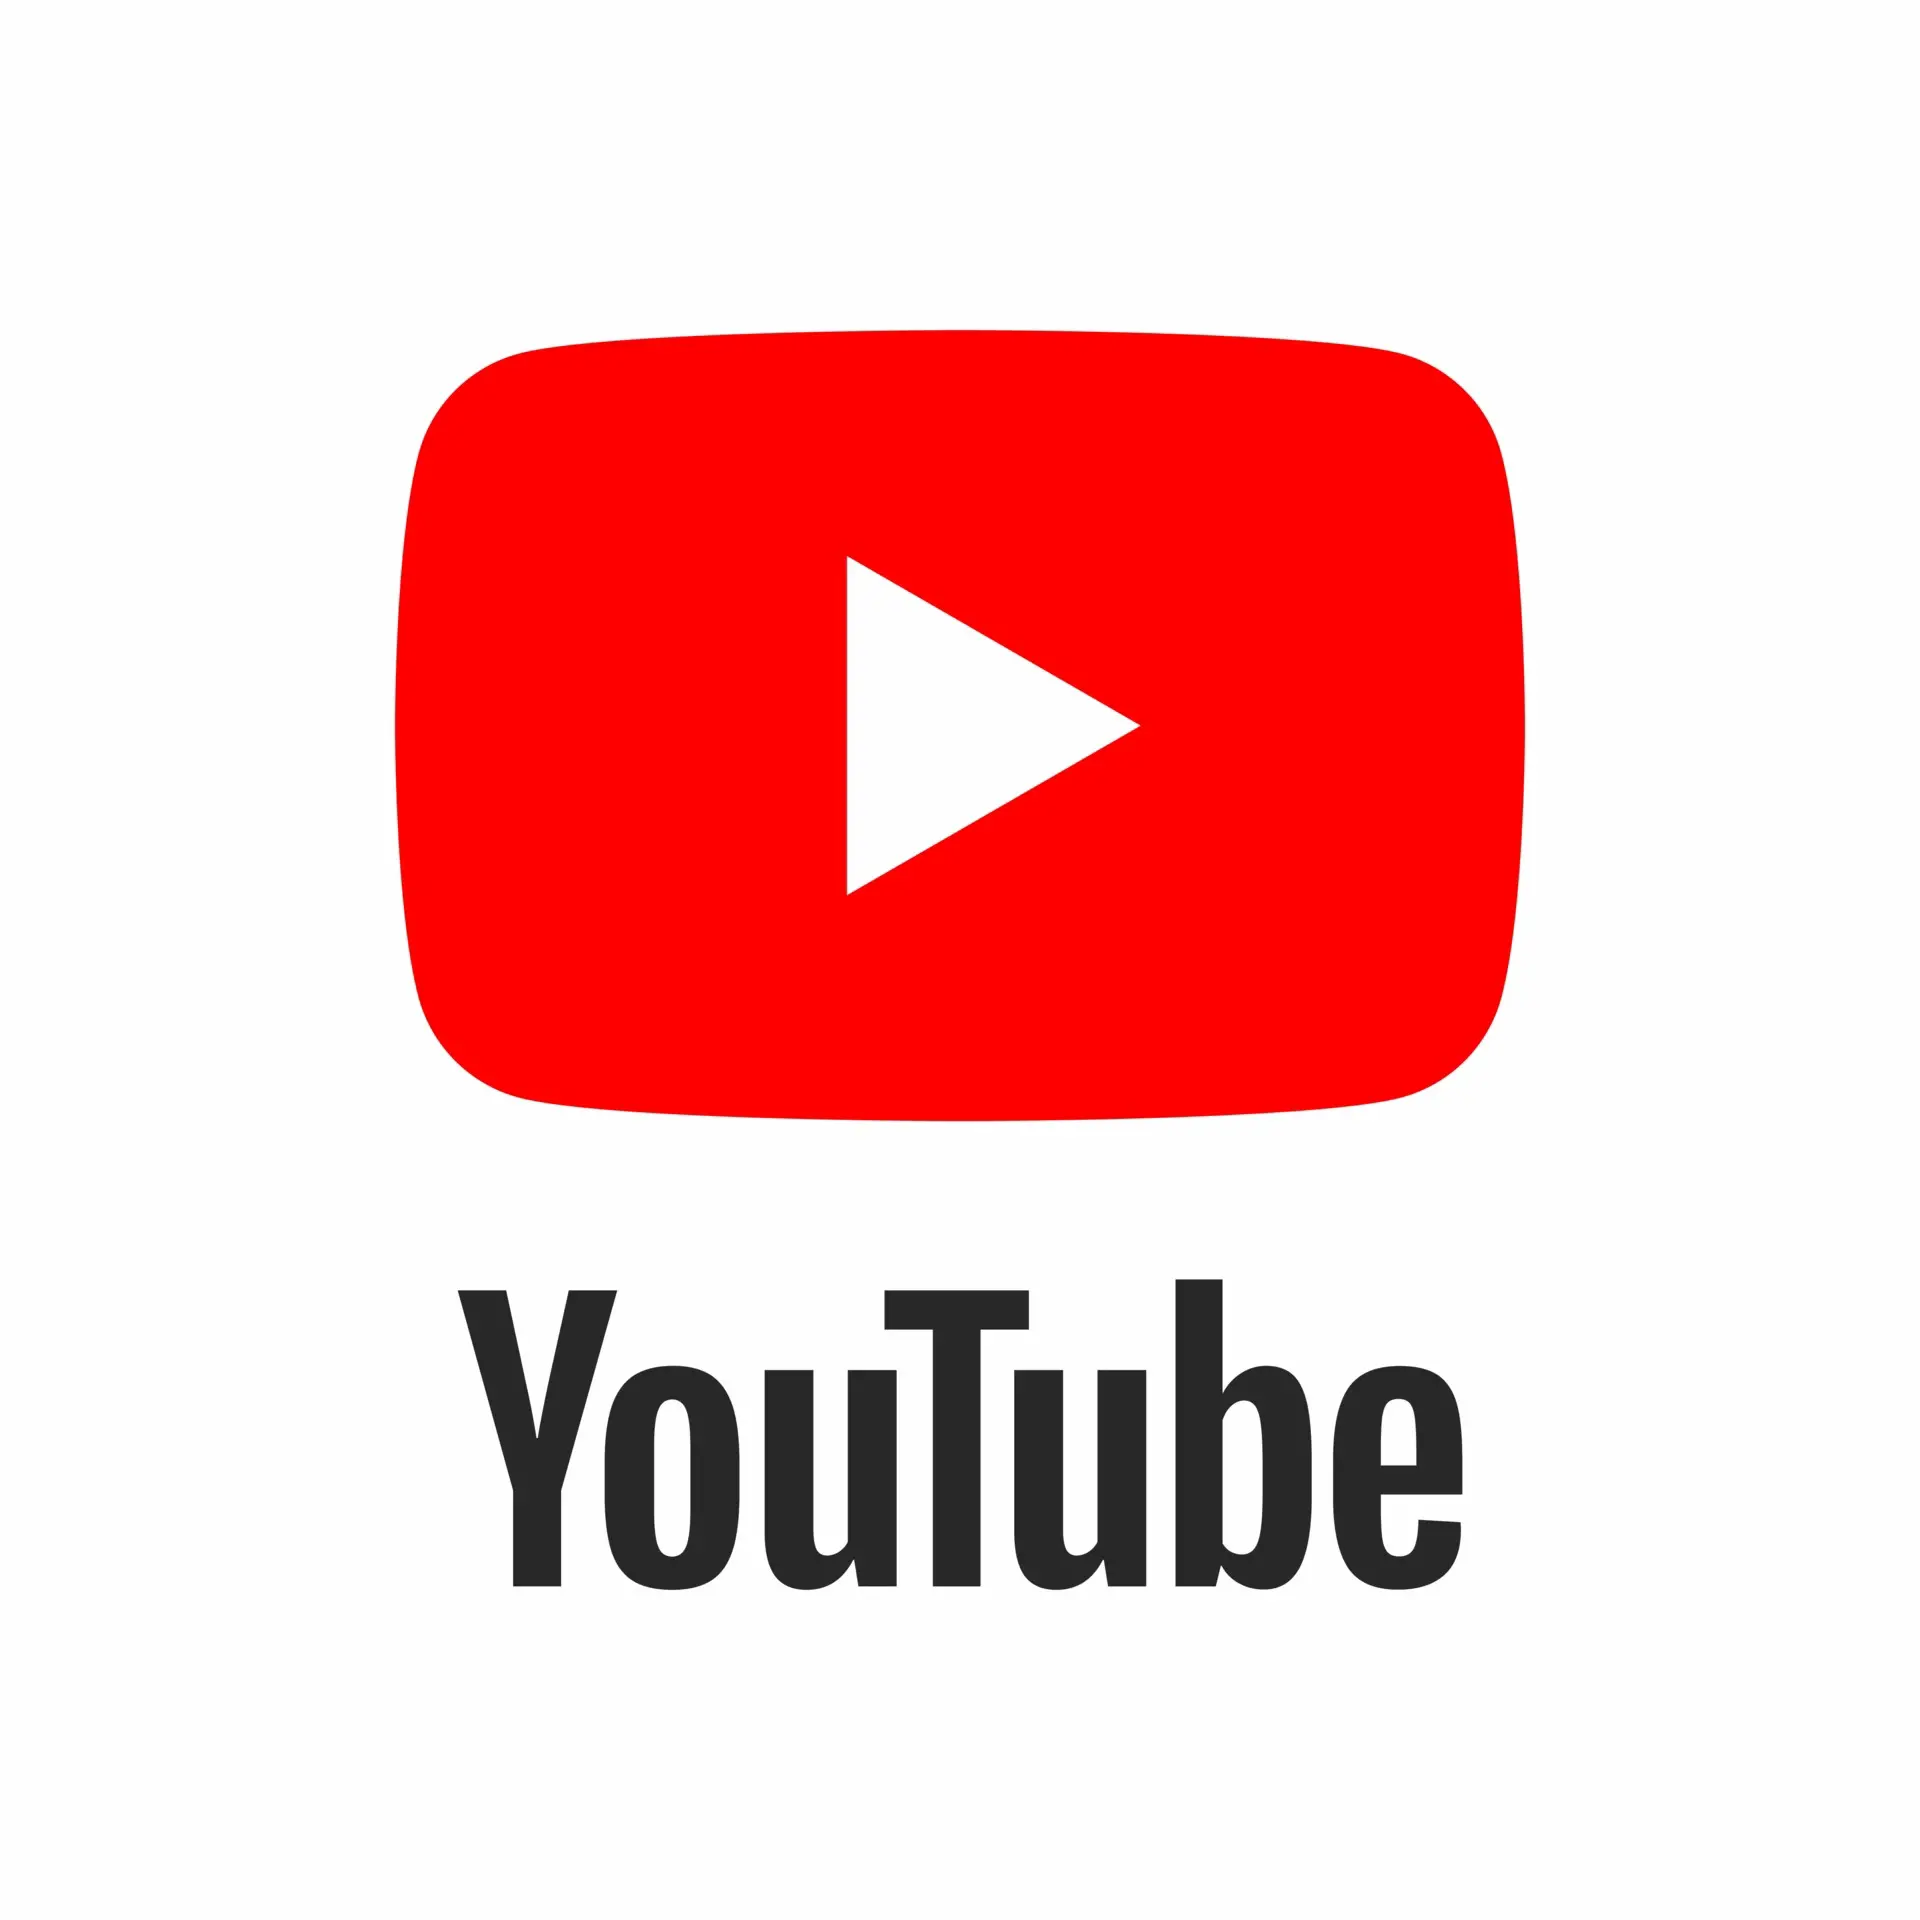 Youtube-icon-editorial-free-vector.webp